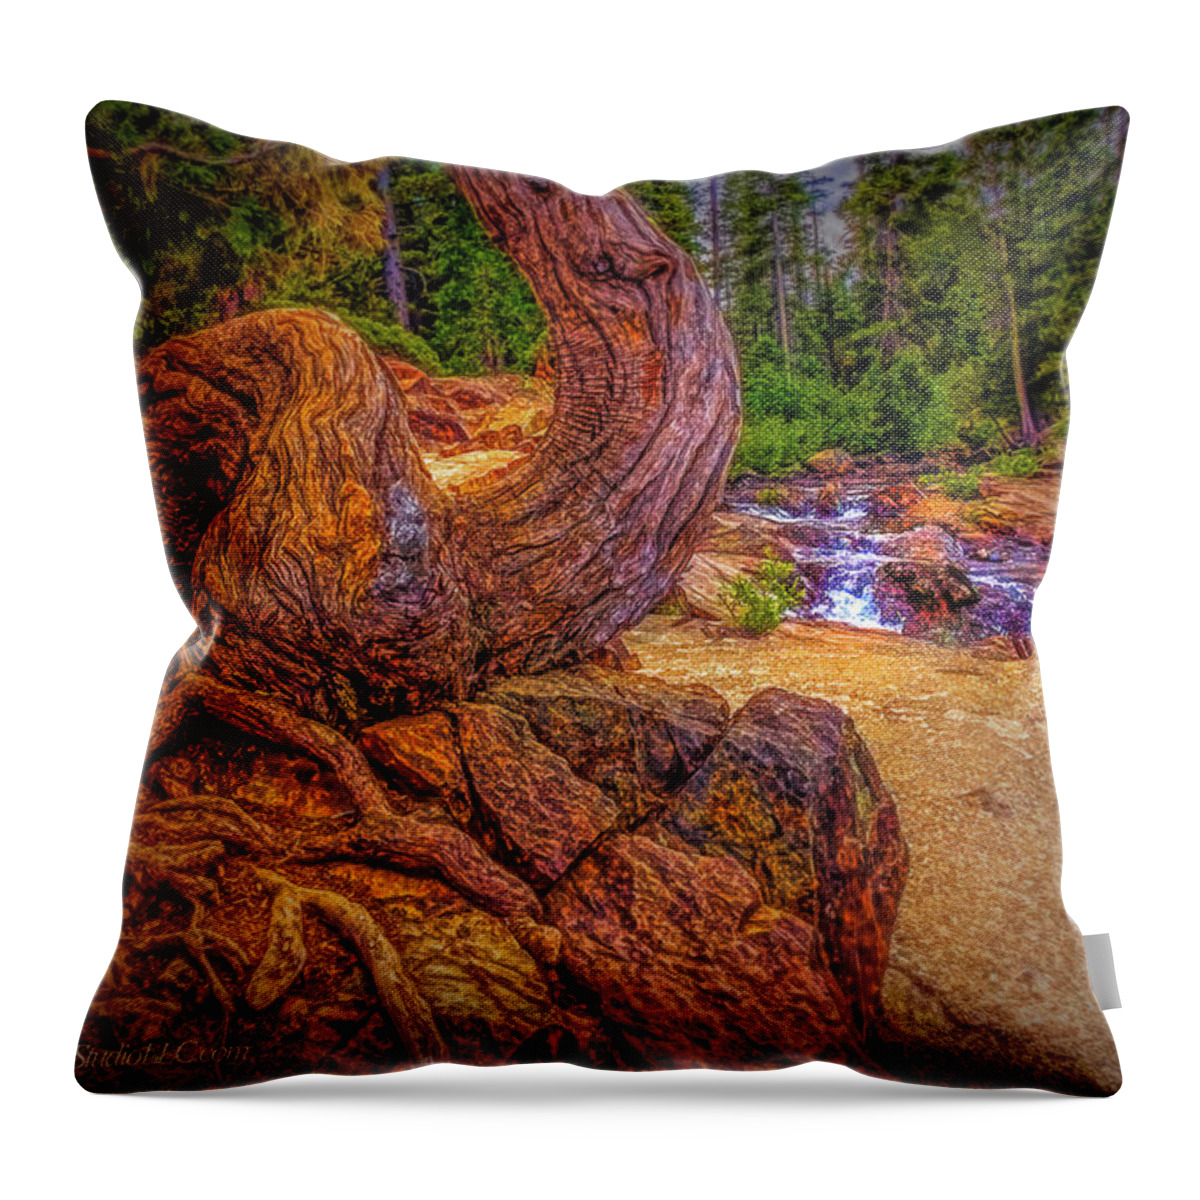 Water Throw Pillow featuring the photograph Glen Alpine Falls by LeeAnn McLaneGoetz McLaneGoetzStudioLLCcom